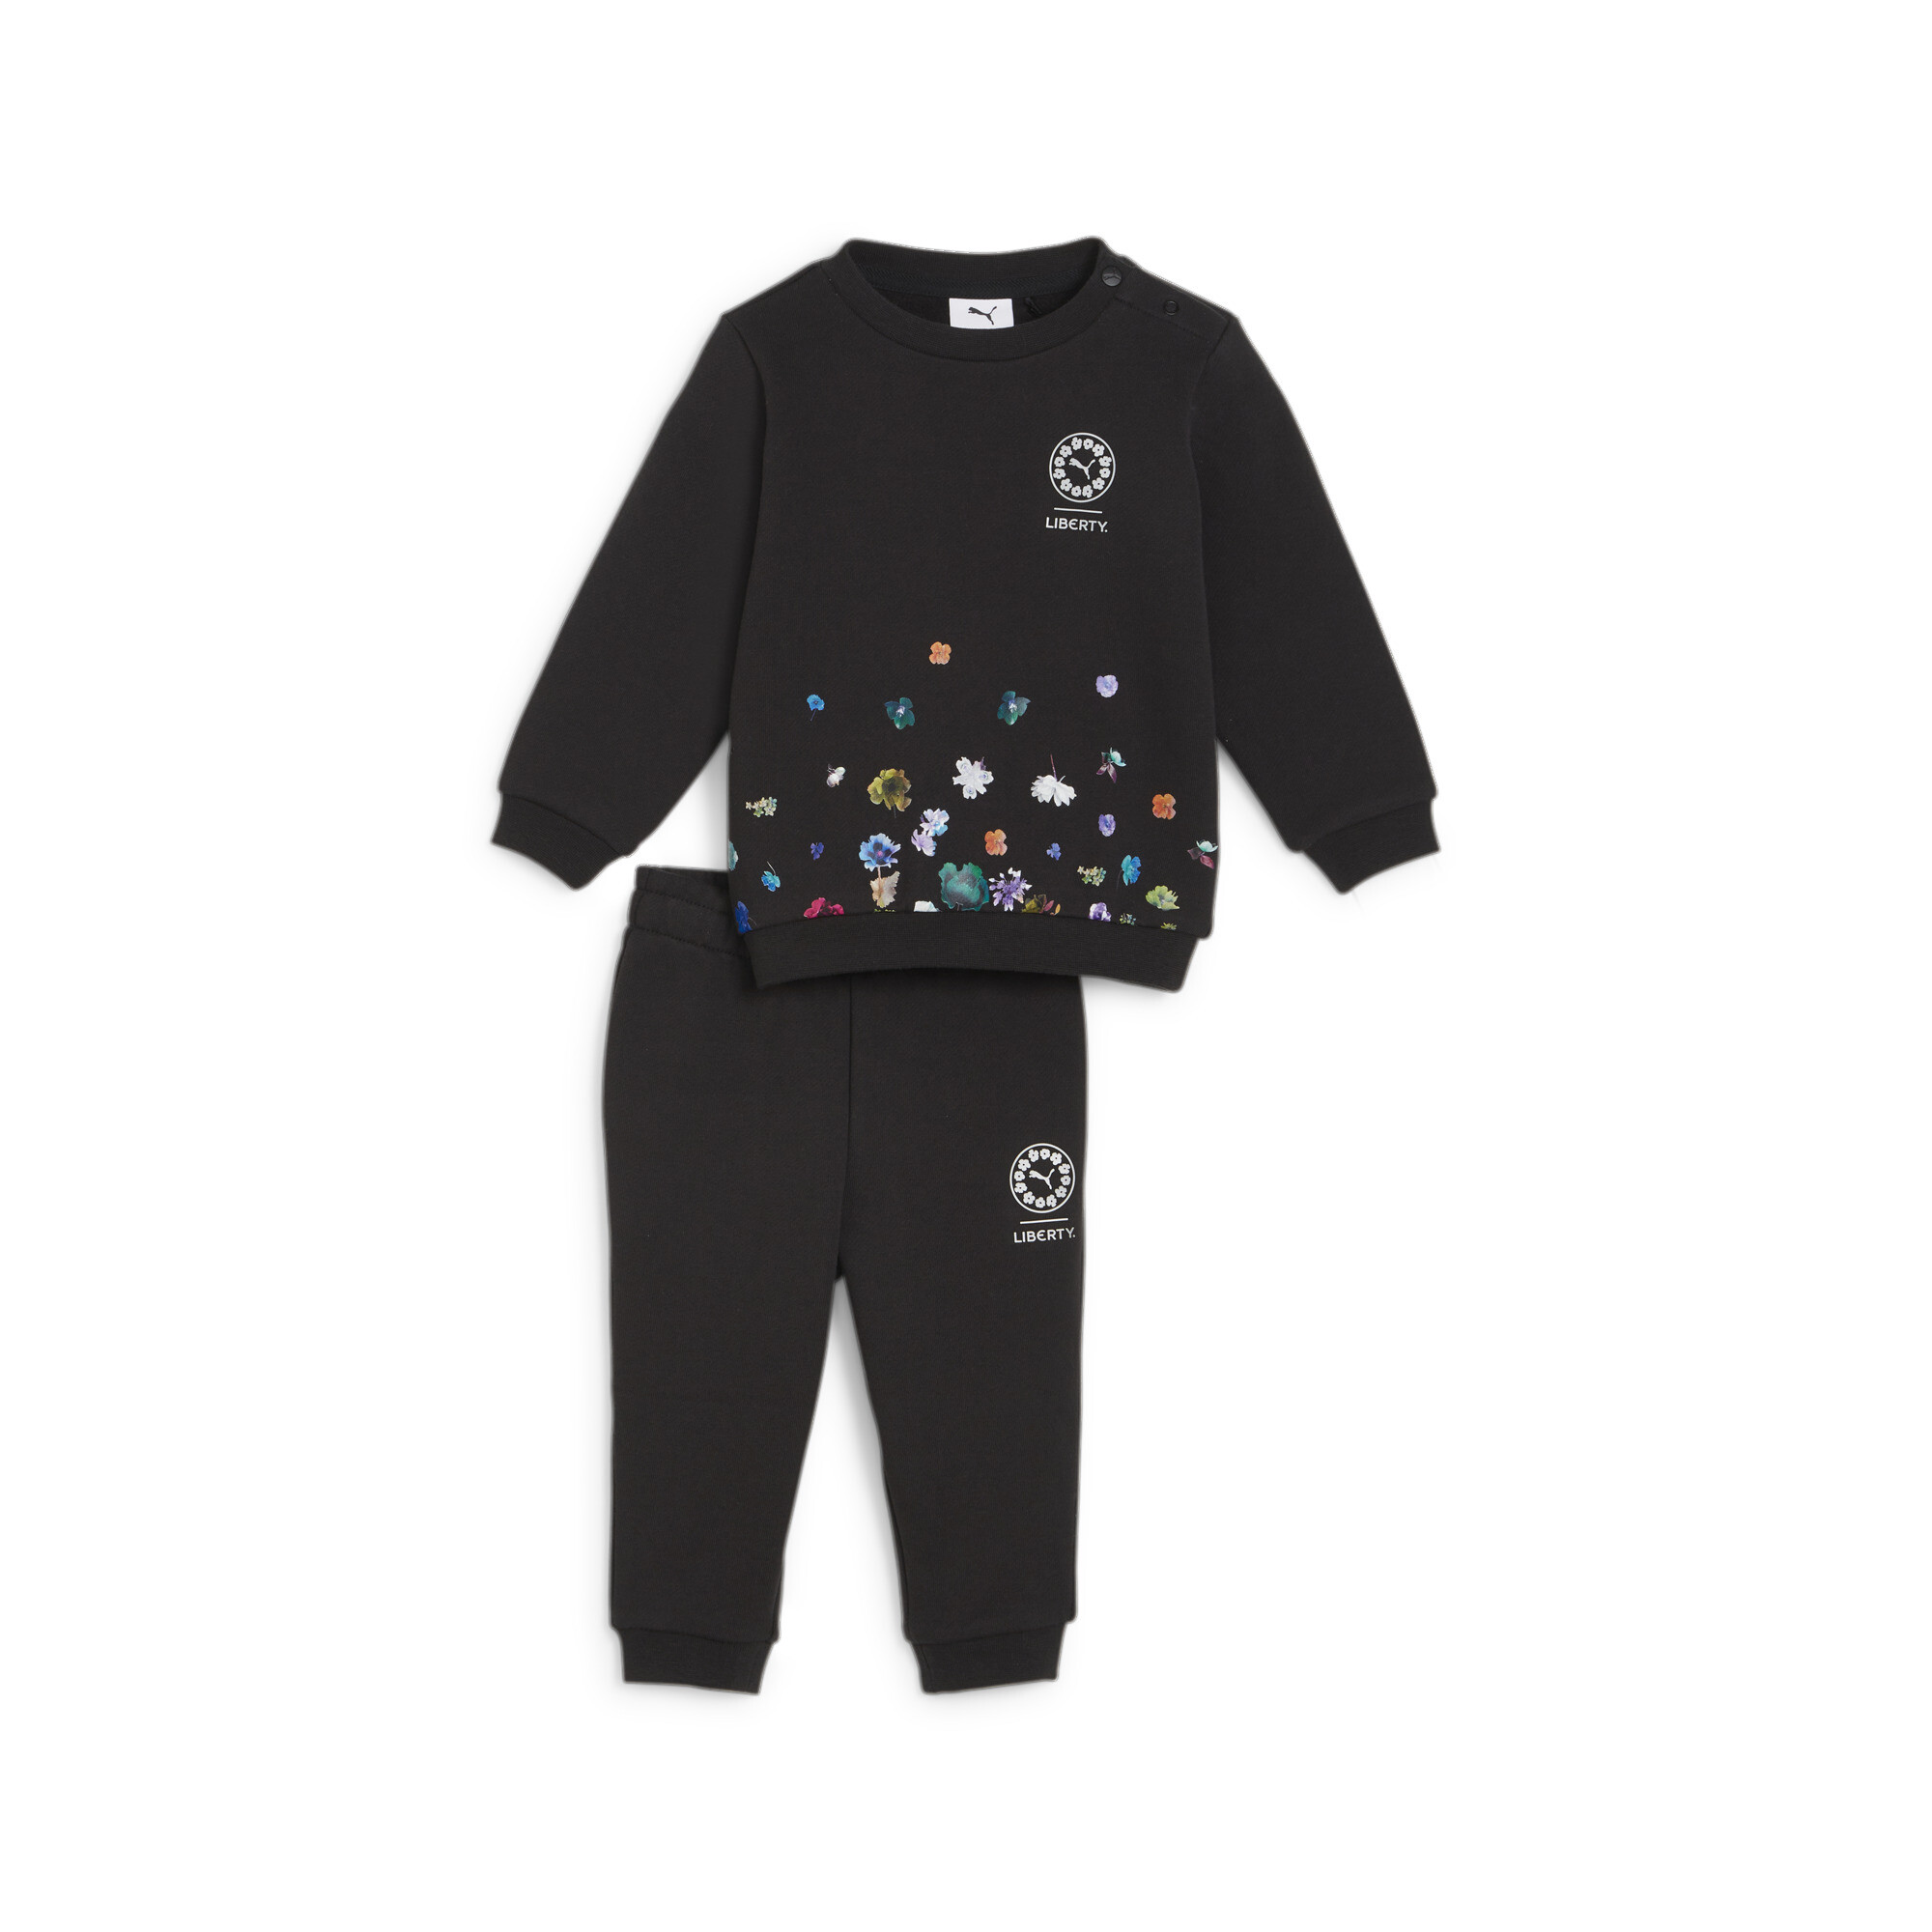 Puma X LIBERTY Toddlers' Jogger Set, Black, Size 3-4Y, Clothing